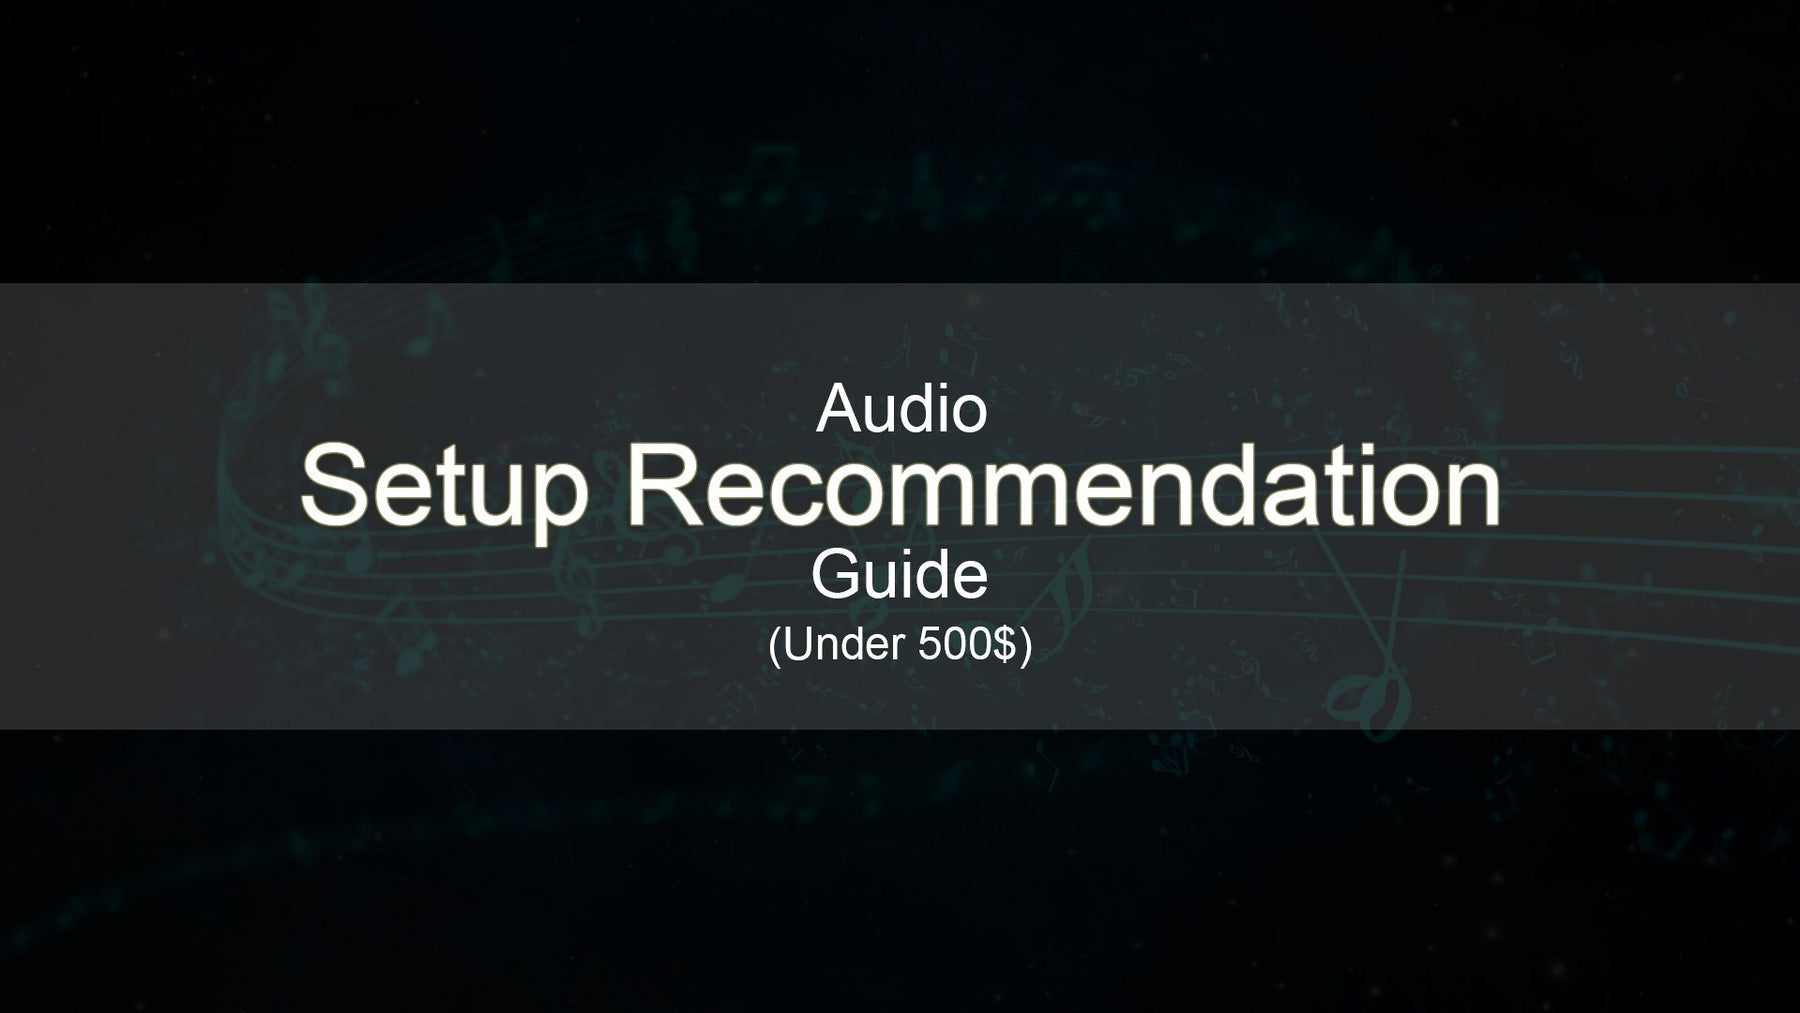 Audio Setup Under 500$ Recommendation Guide!!